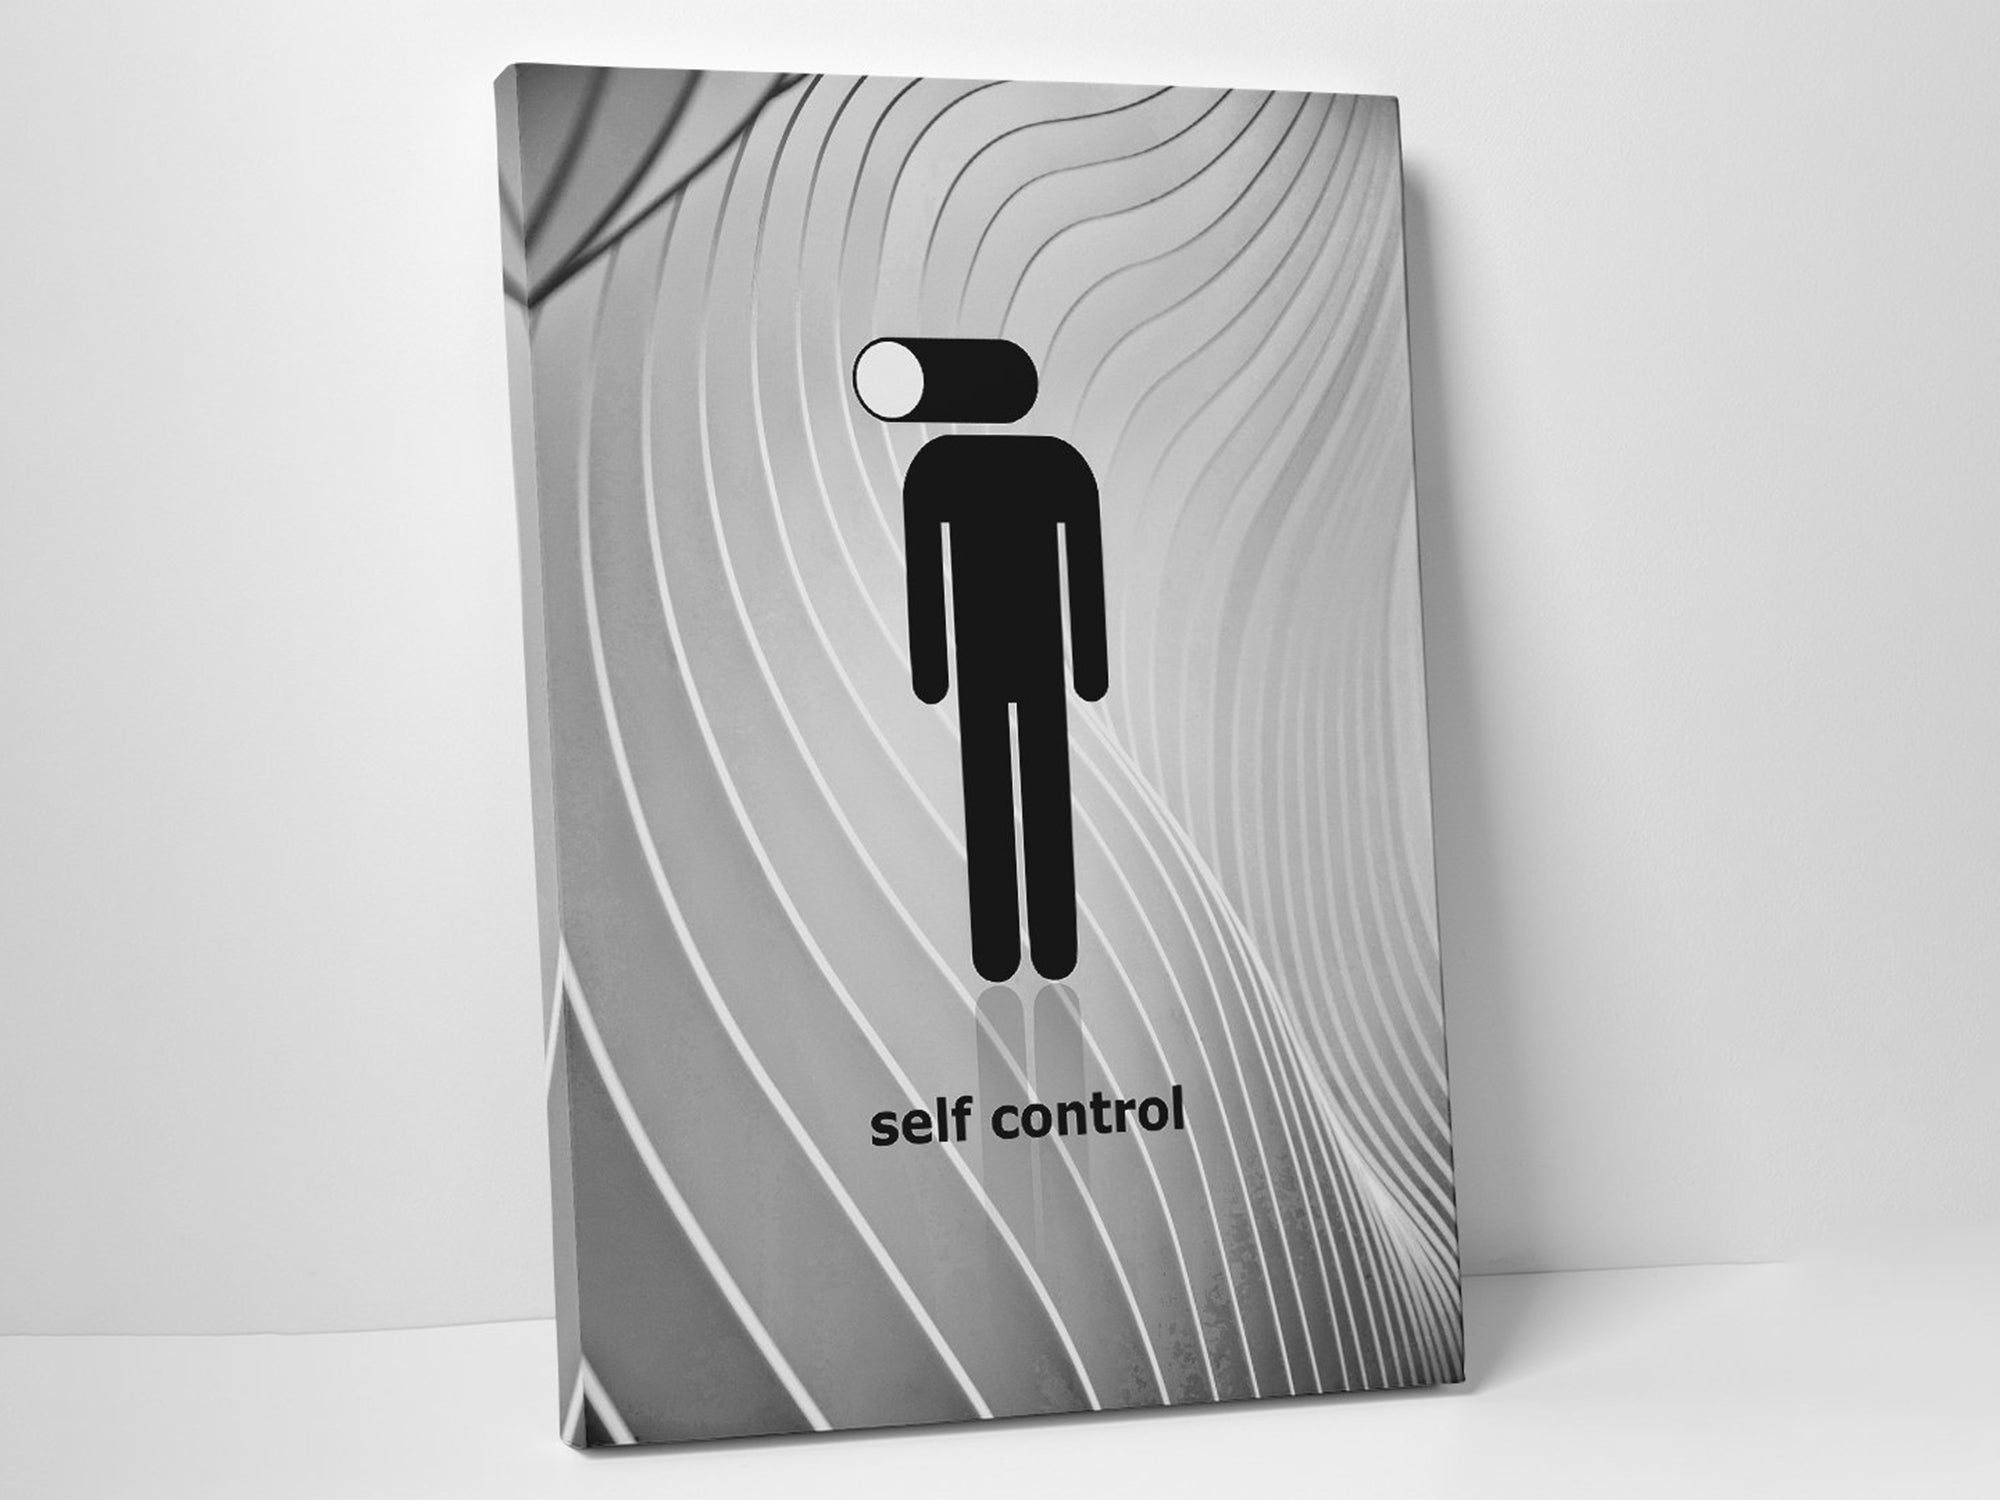 Self Control - Motivational - Canvas Wall Art